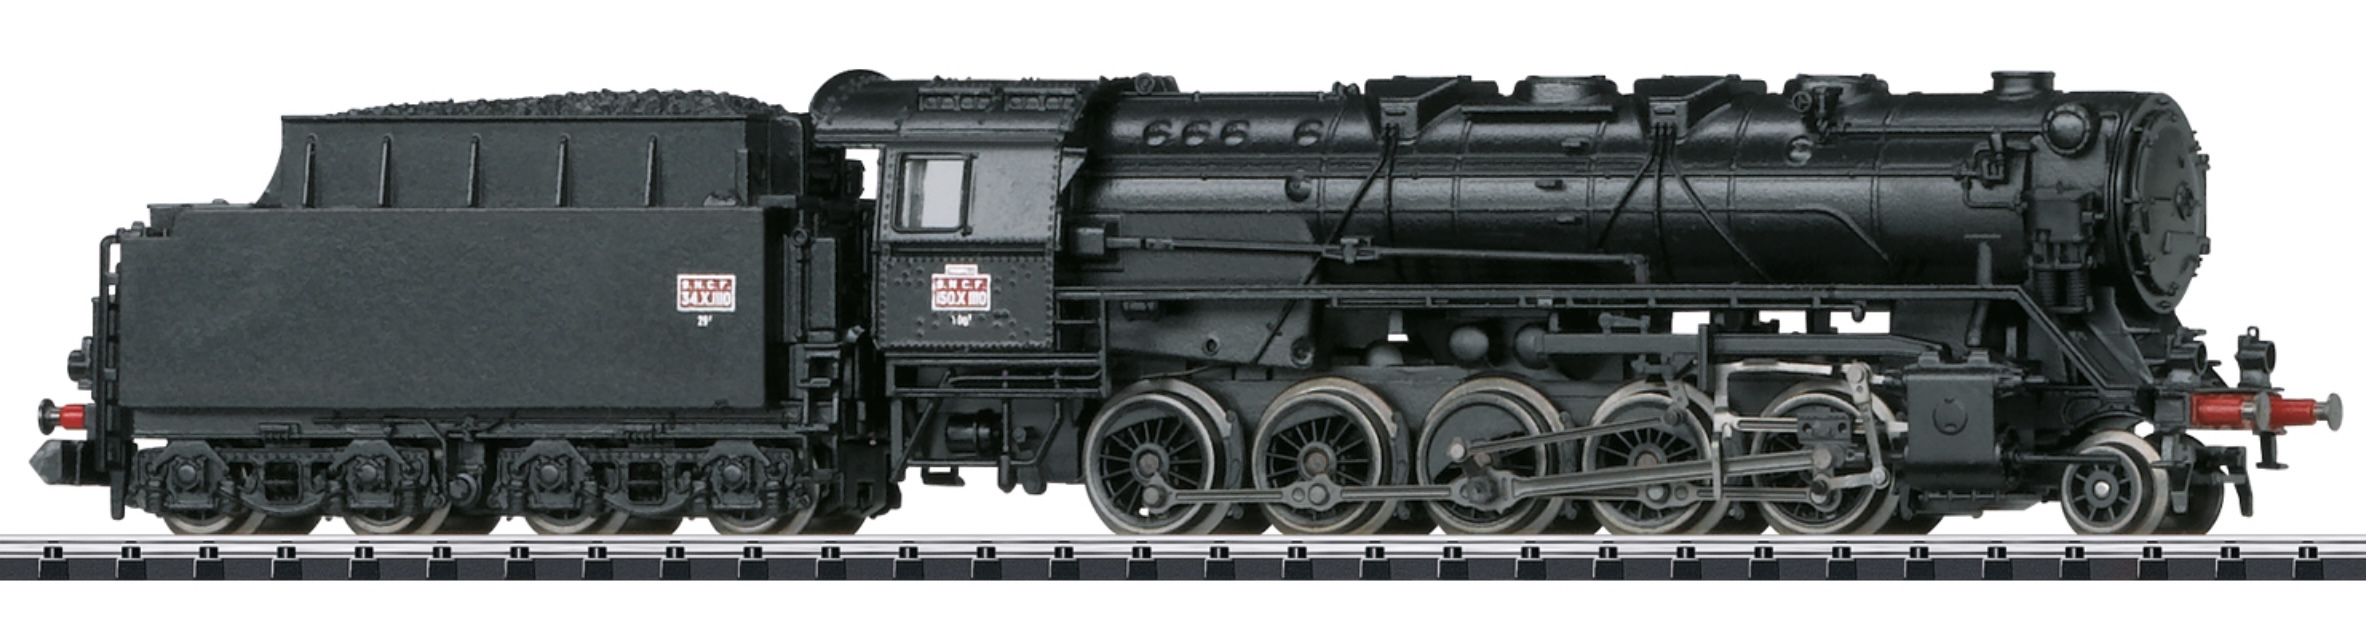 N Scale - Minitrix - 16442 - Locomotive, Steam, 2-10-0 Class 150 X - SNCF - 150 X 1110